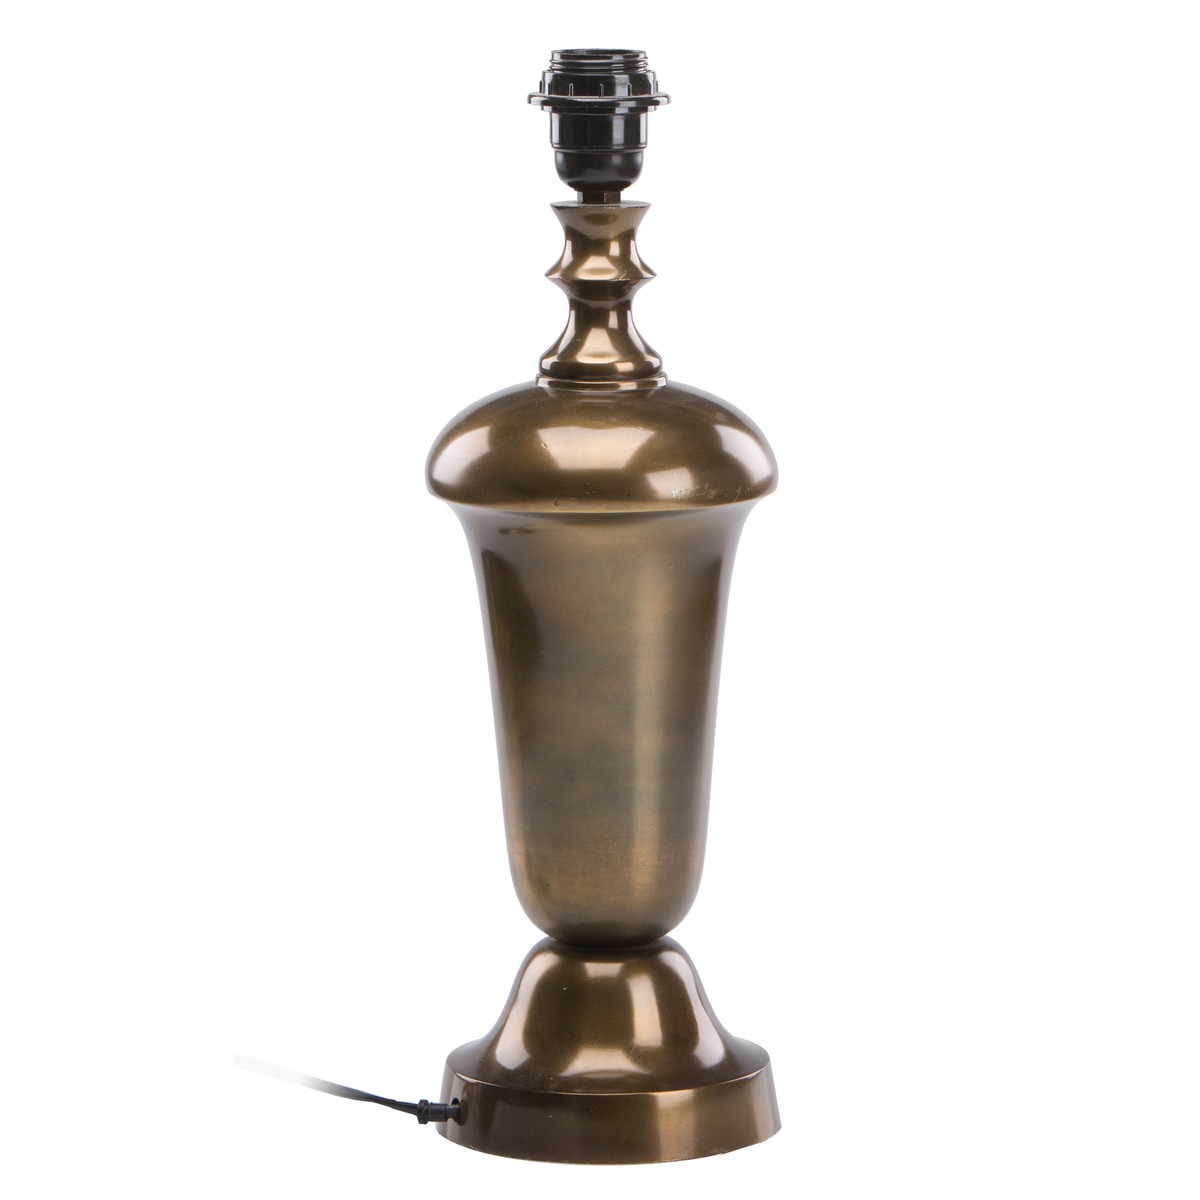   Pied de lampe Amphore Brun bronze 13x13x36cm